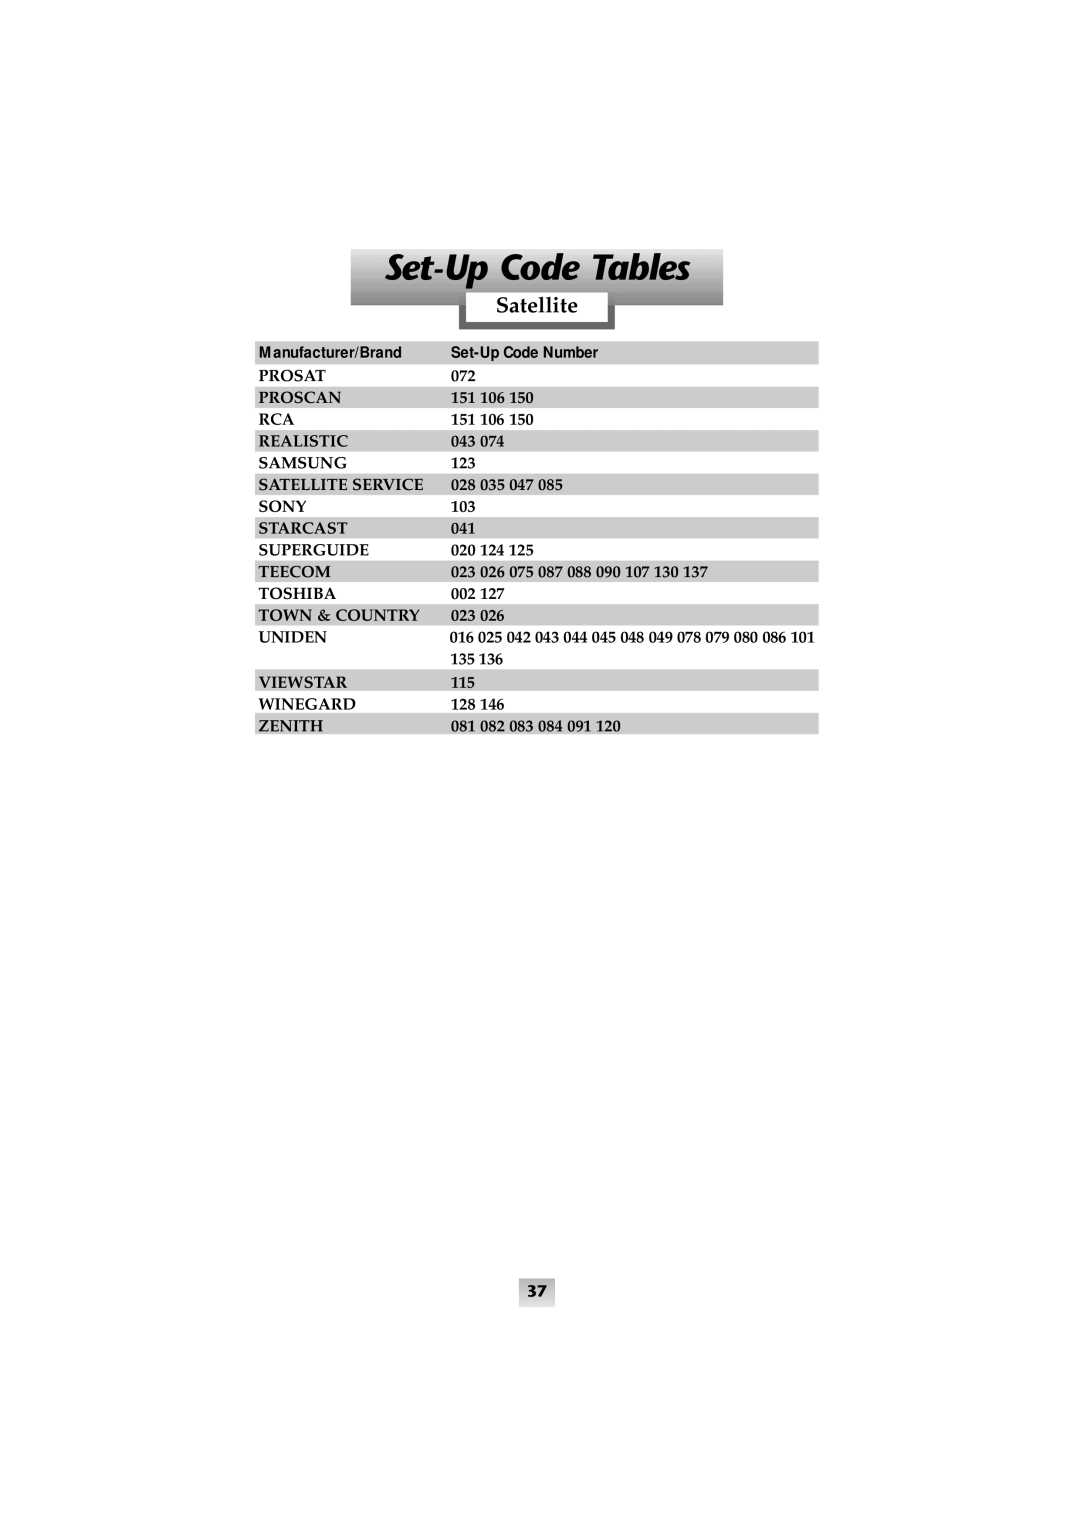 Universal Remote Control SL-8000 manual Satellite, Set-Up Code Tables, Manufacturer/Brand, Set-Up Code Number 